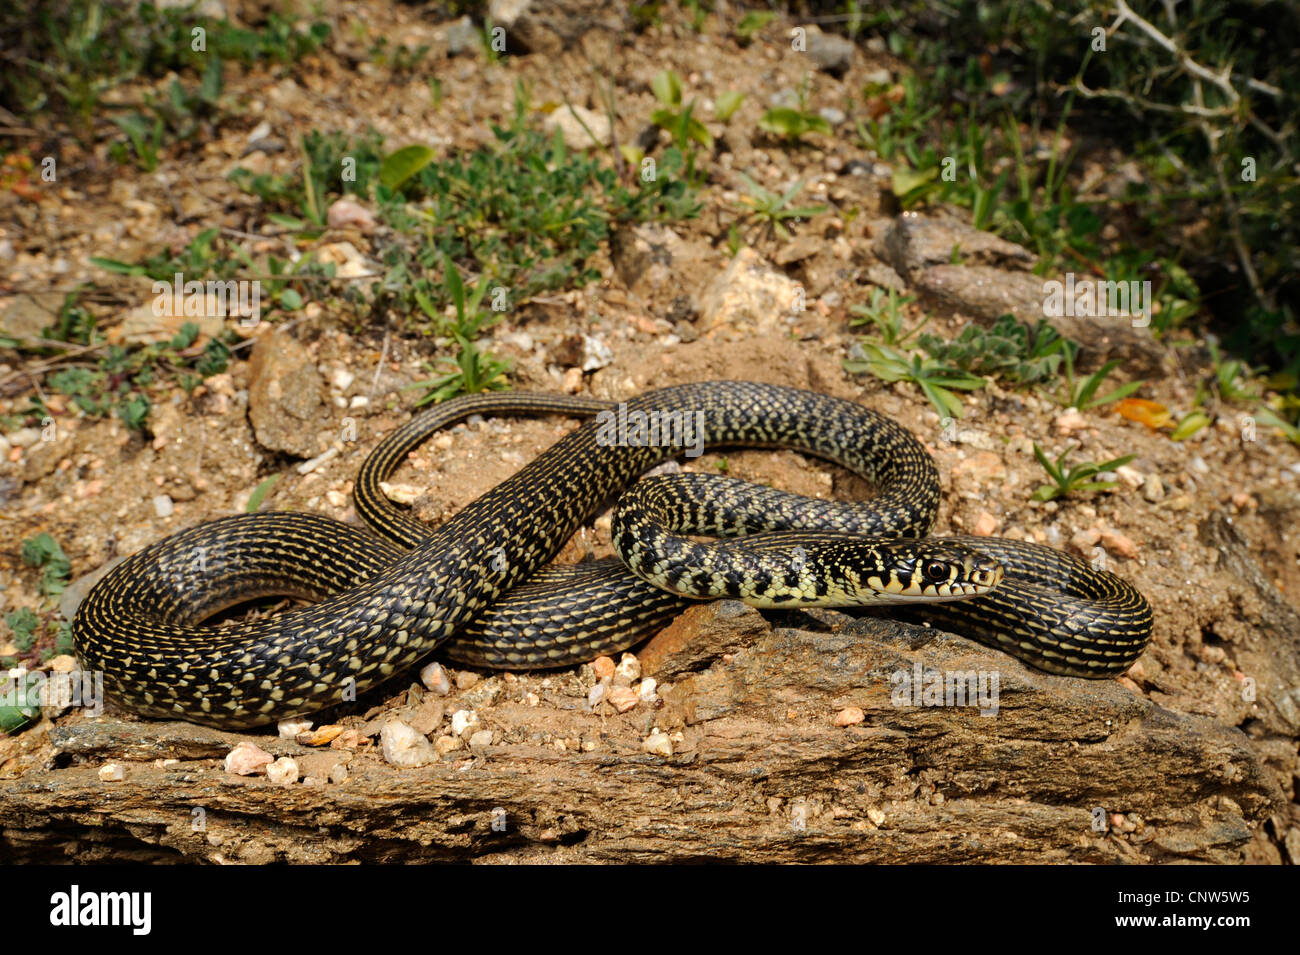 Whip européen d'Europe occidentale, snake snake whip vert-foncé, whipsnake (Coluber viridiflavus Hierophis viridiflavus,), sur le sol rocheux, l'Italie, Sardaigne Banque D'Images